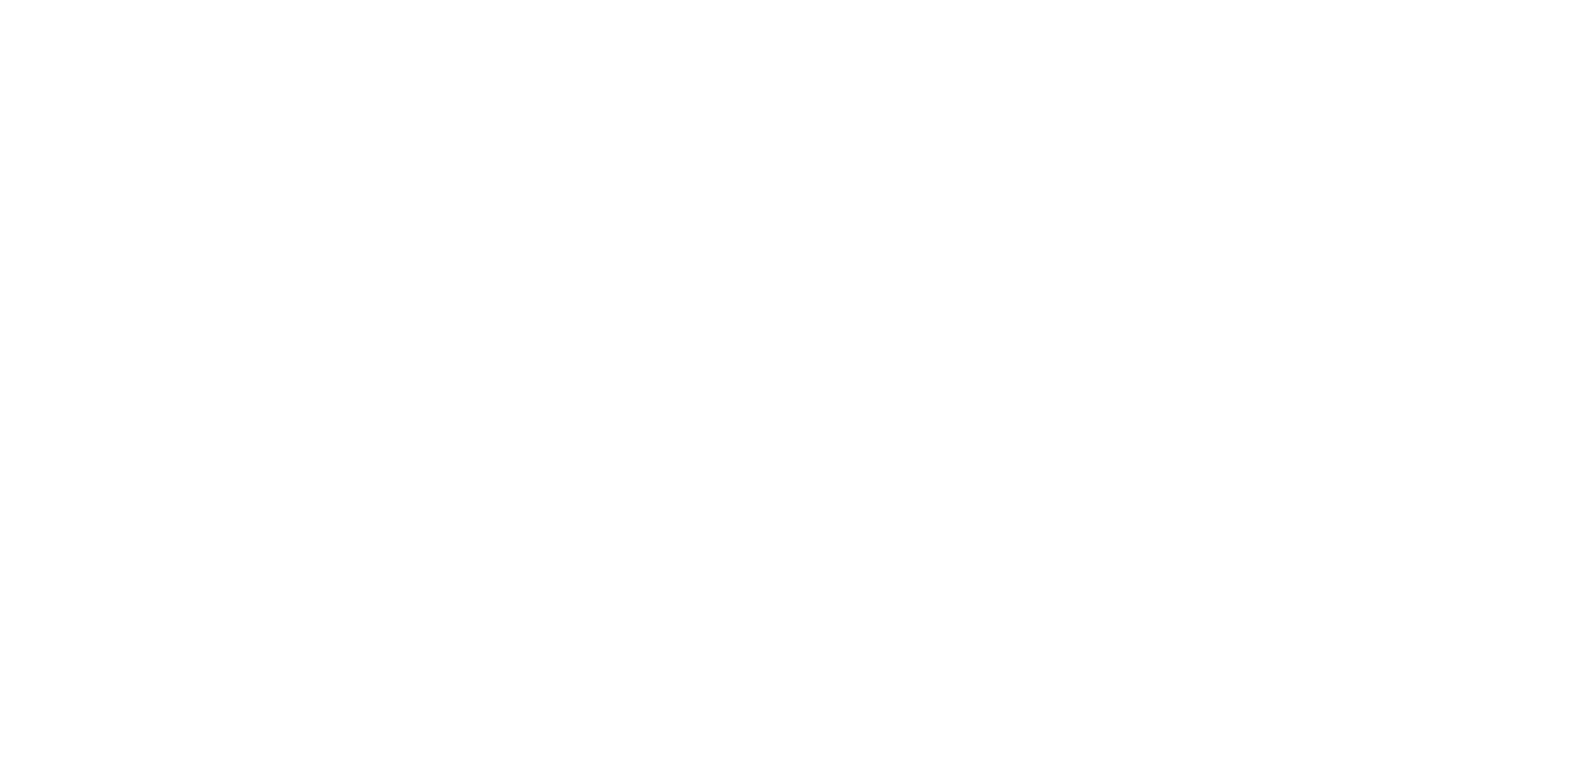 Fortress REIT logo large for dark backgrounds (transparent PNG)